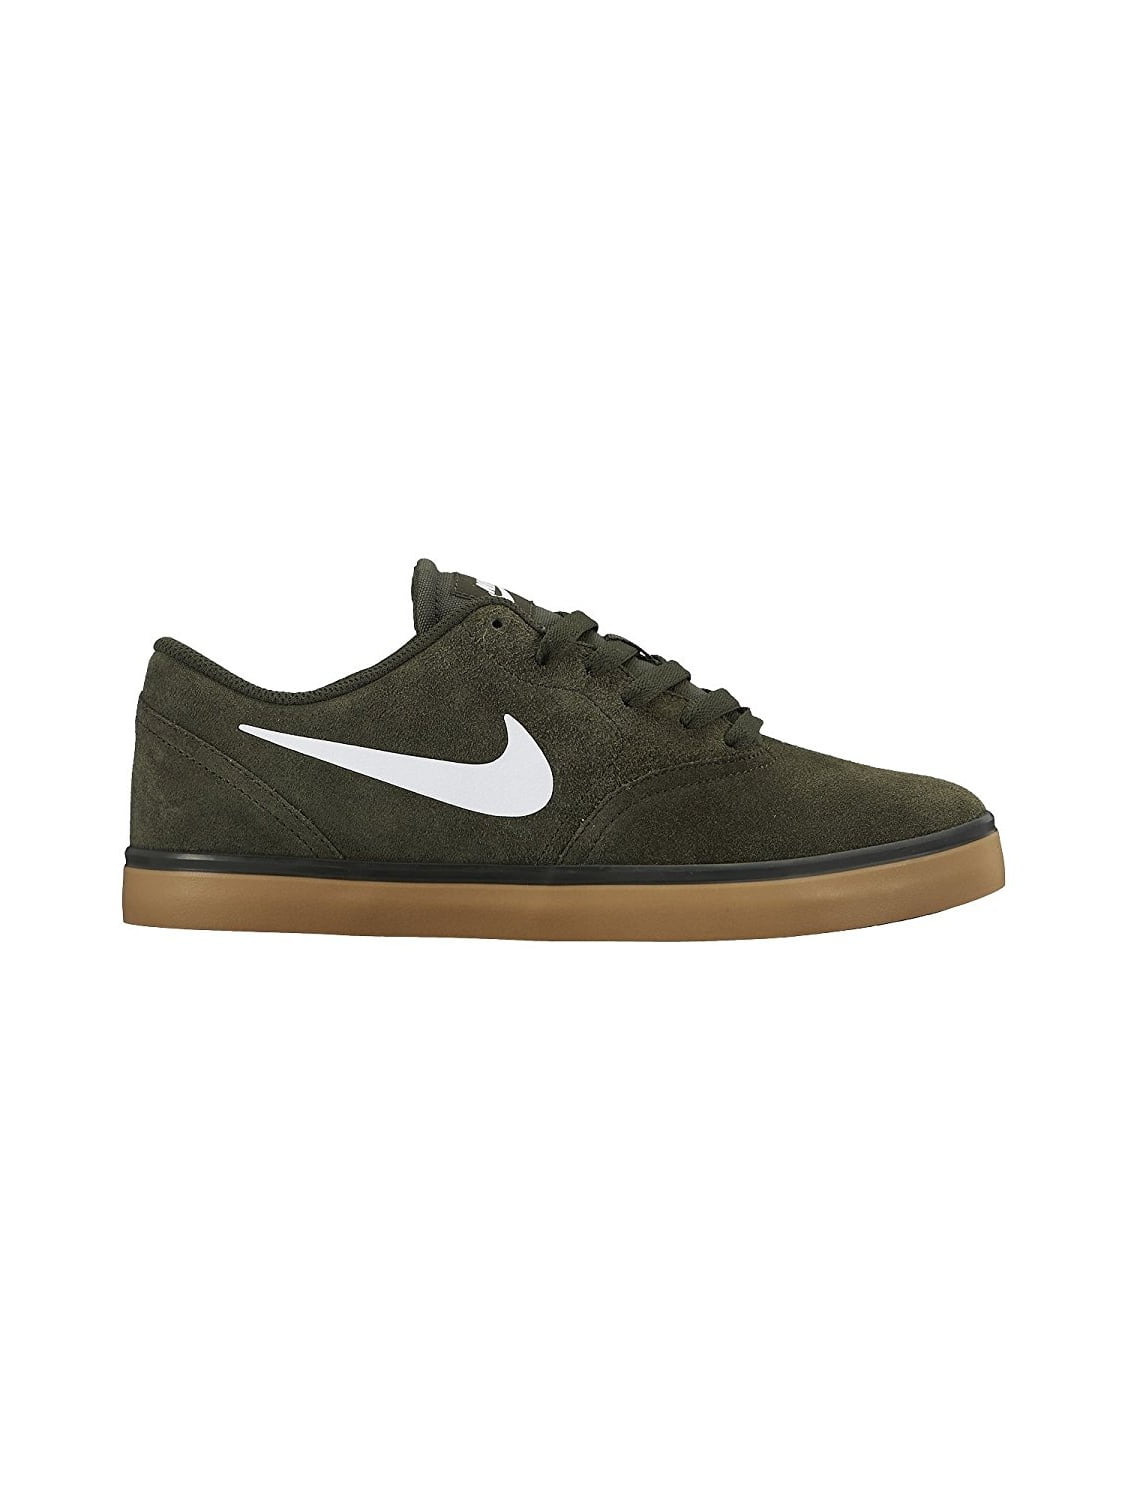 Nike SB Check Suede Skate Shoe, Sequoia 